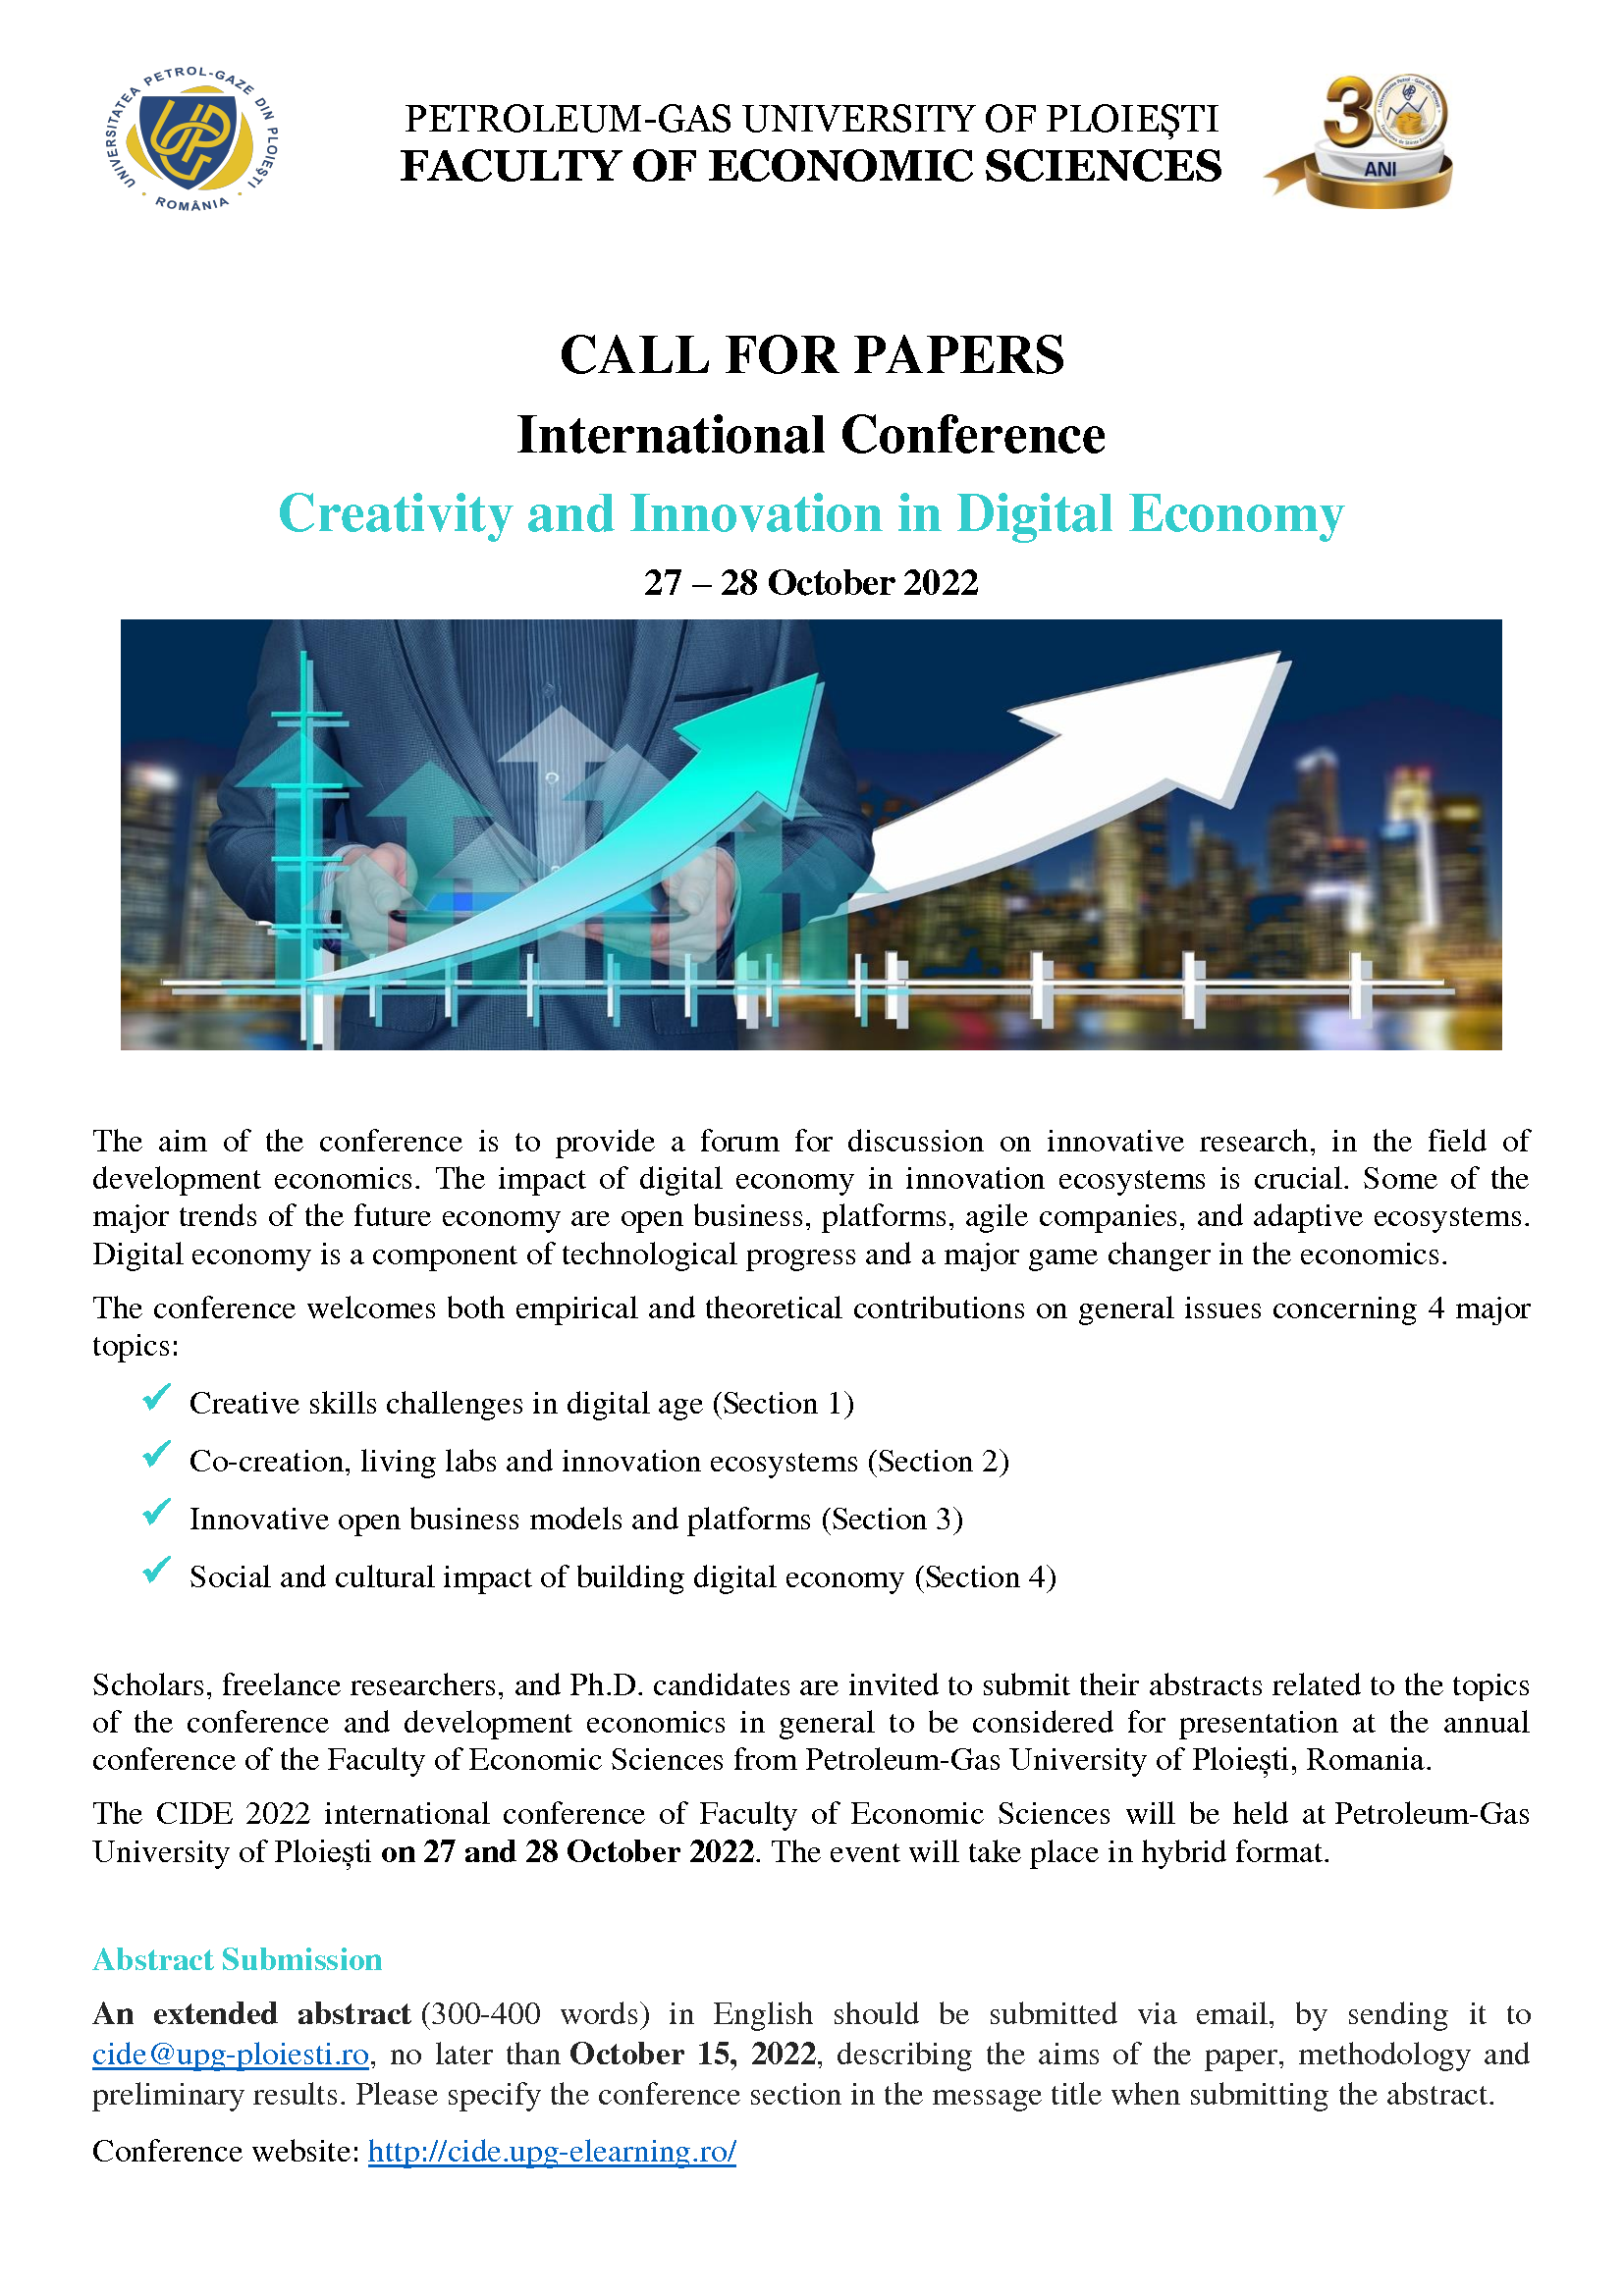 Conference CIDE October 2022 1 of 1